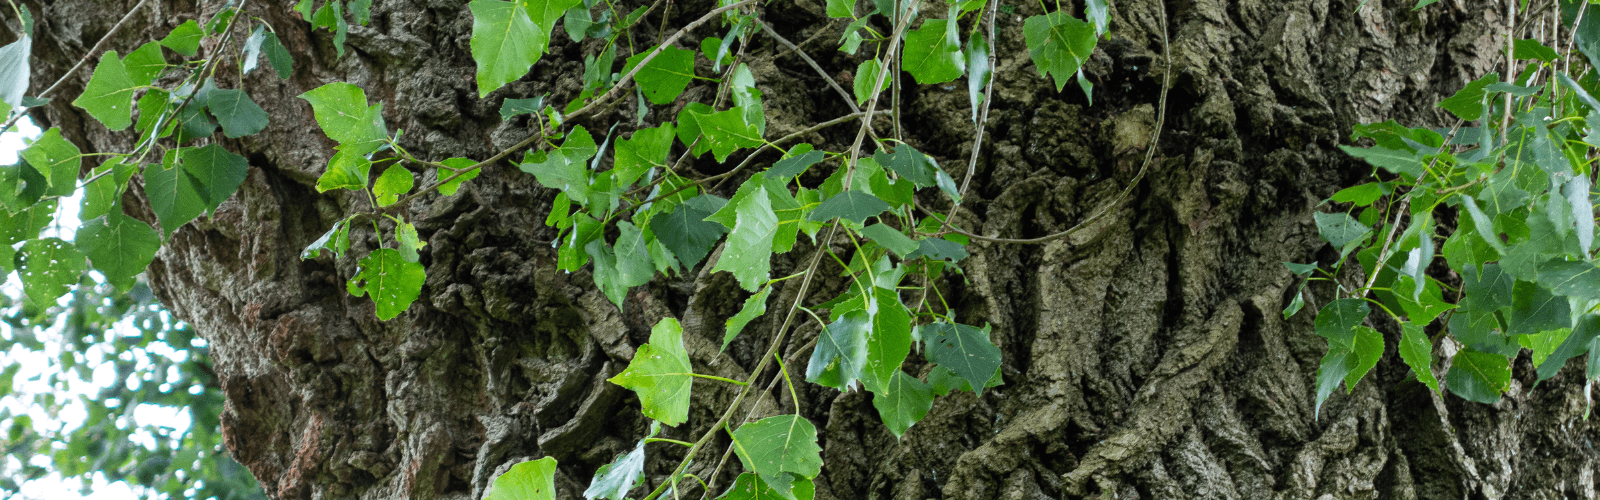 Bark and leaves of a black poplar tree